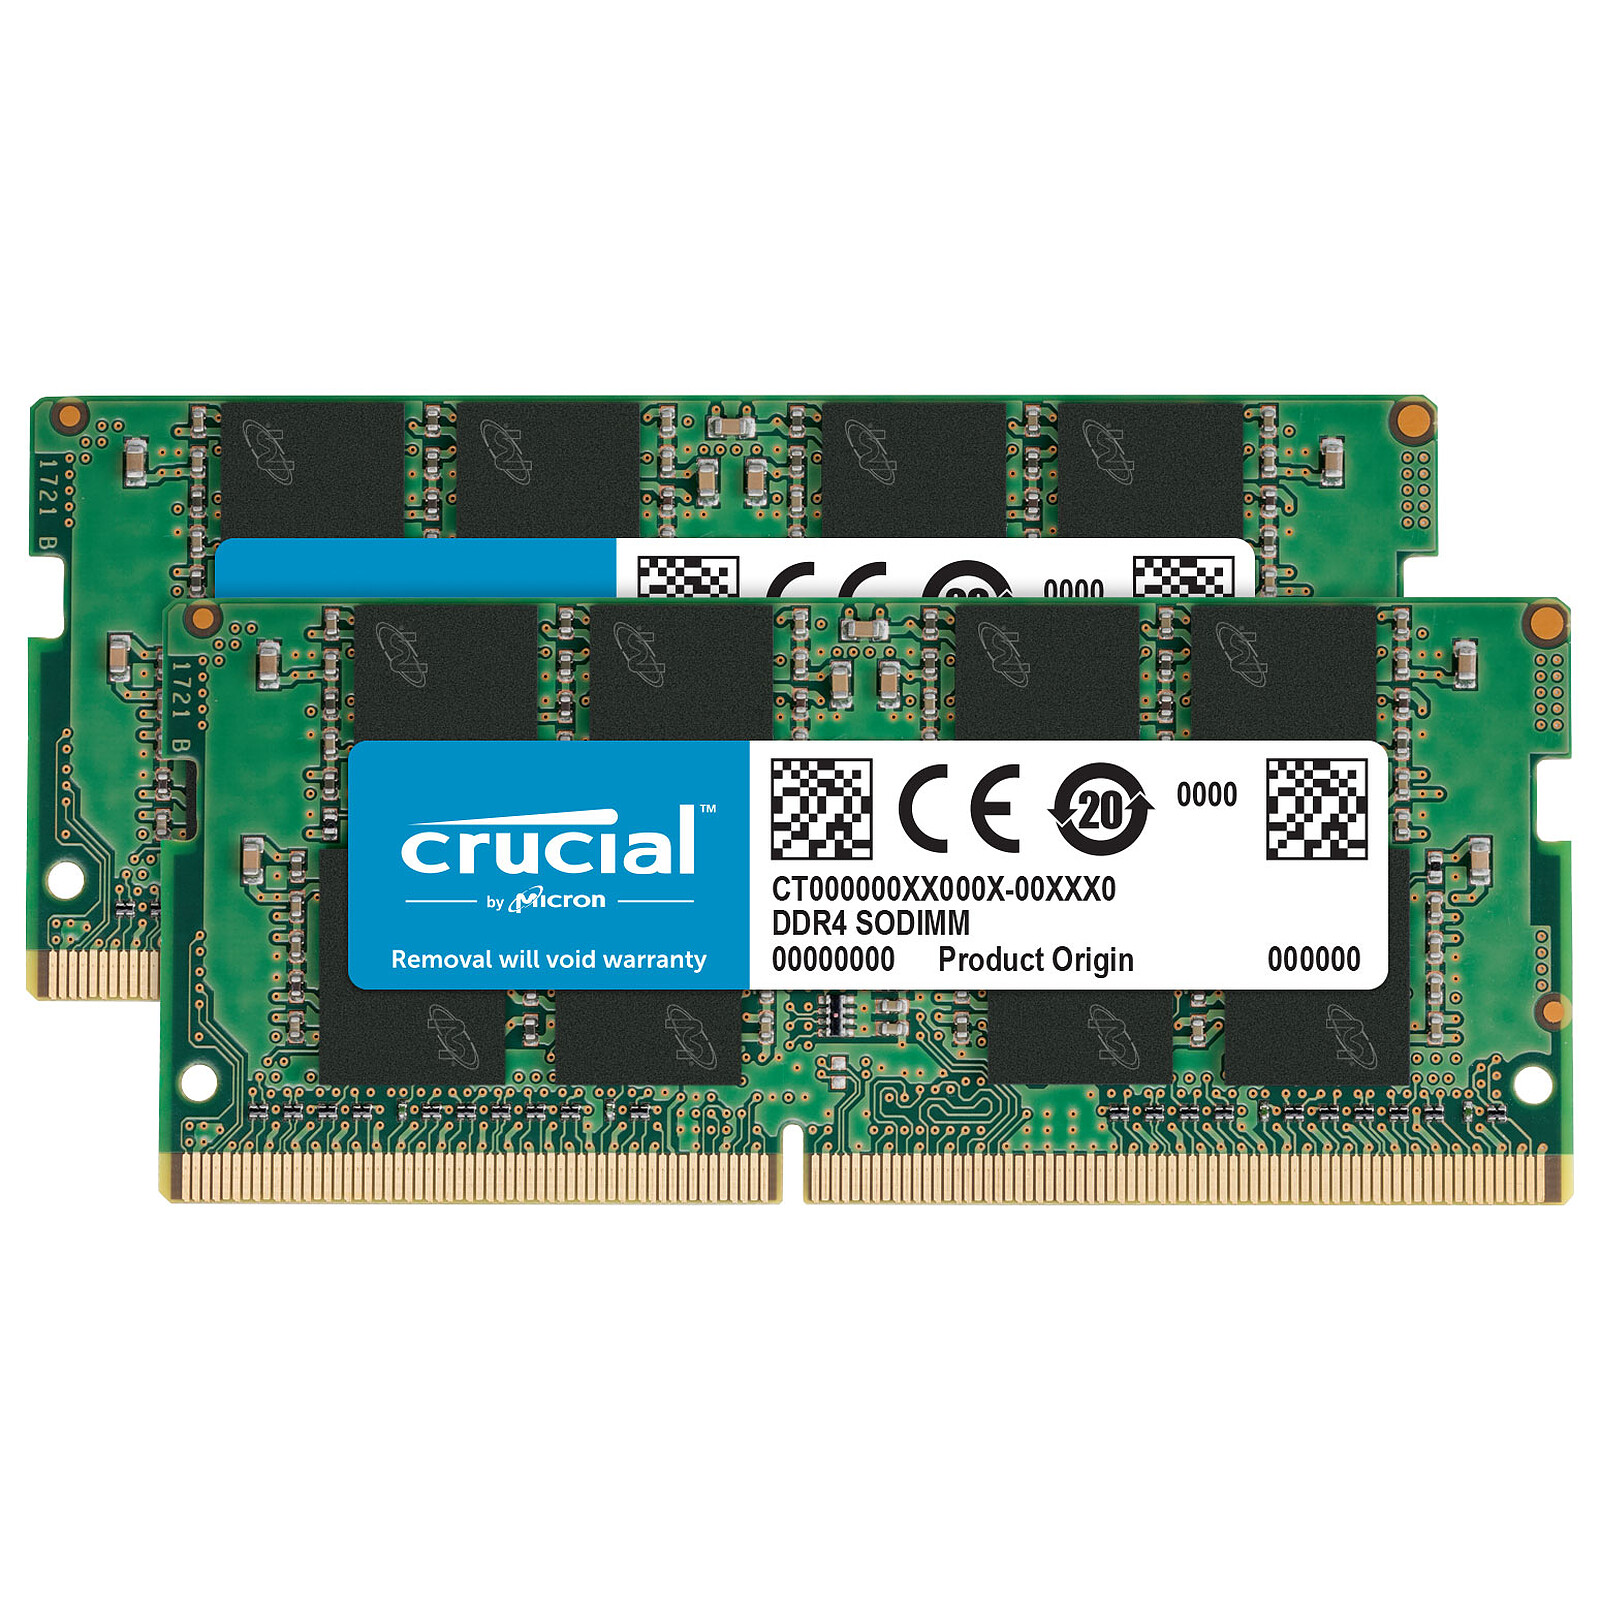 G.Skill Ripjaws 16GB DDR4-3200 PC-25600 CL22 SO-DIMM Memory Kit